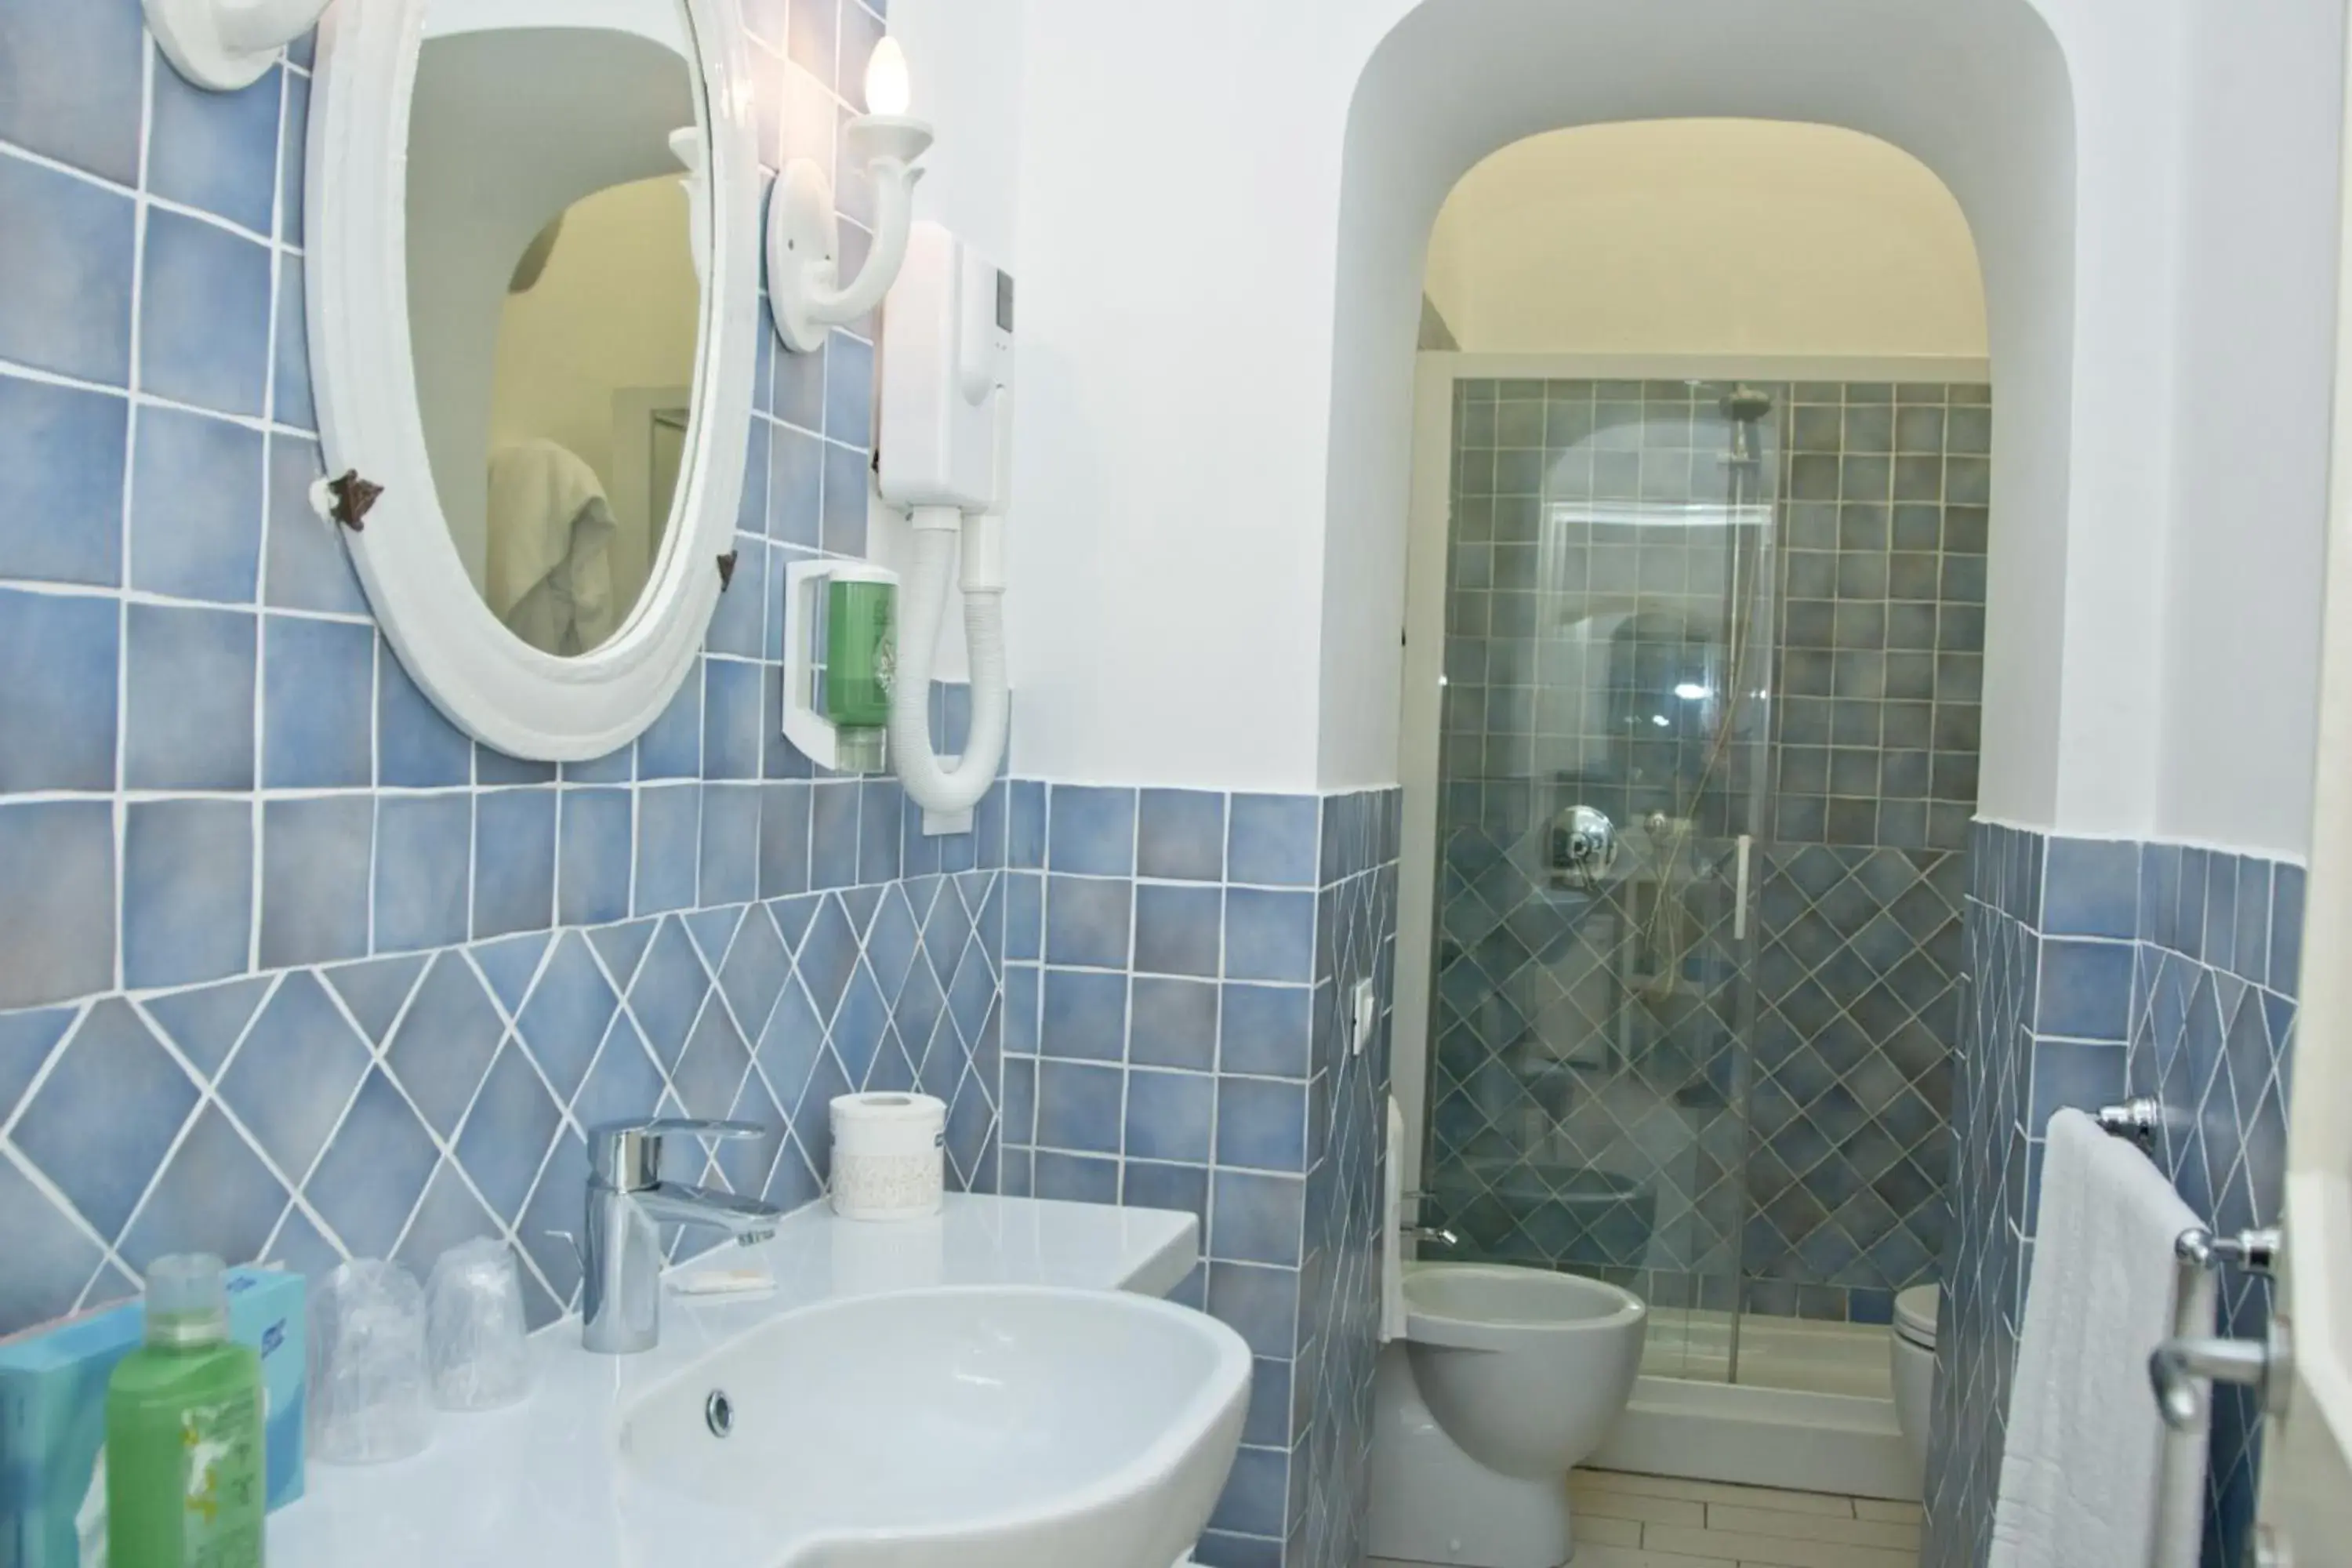 Bathroom in Hotel Ristorante Maga Circe